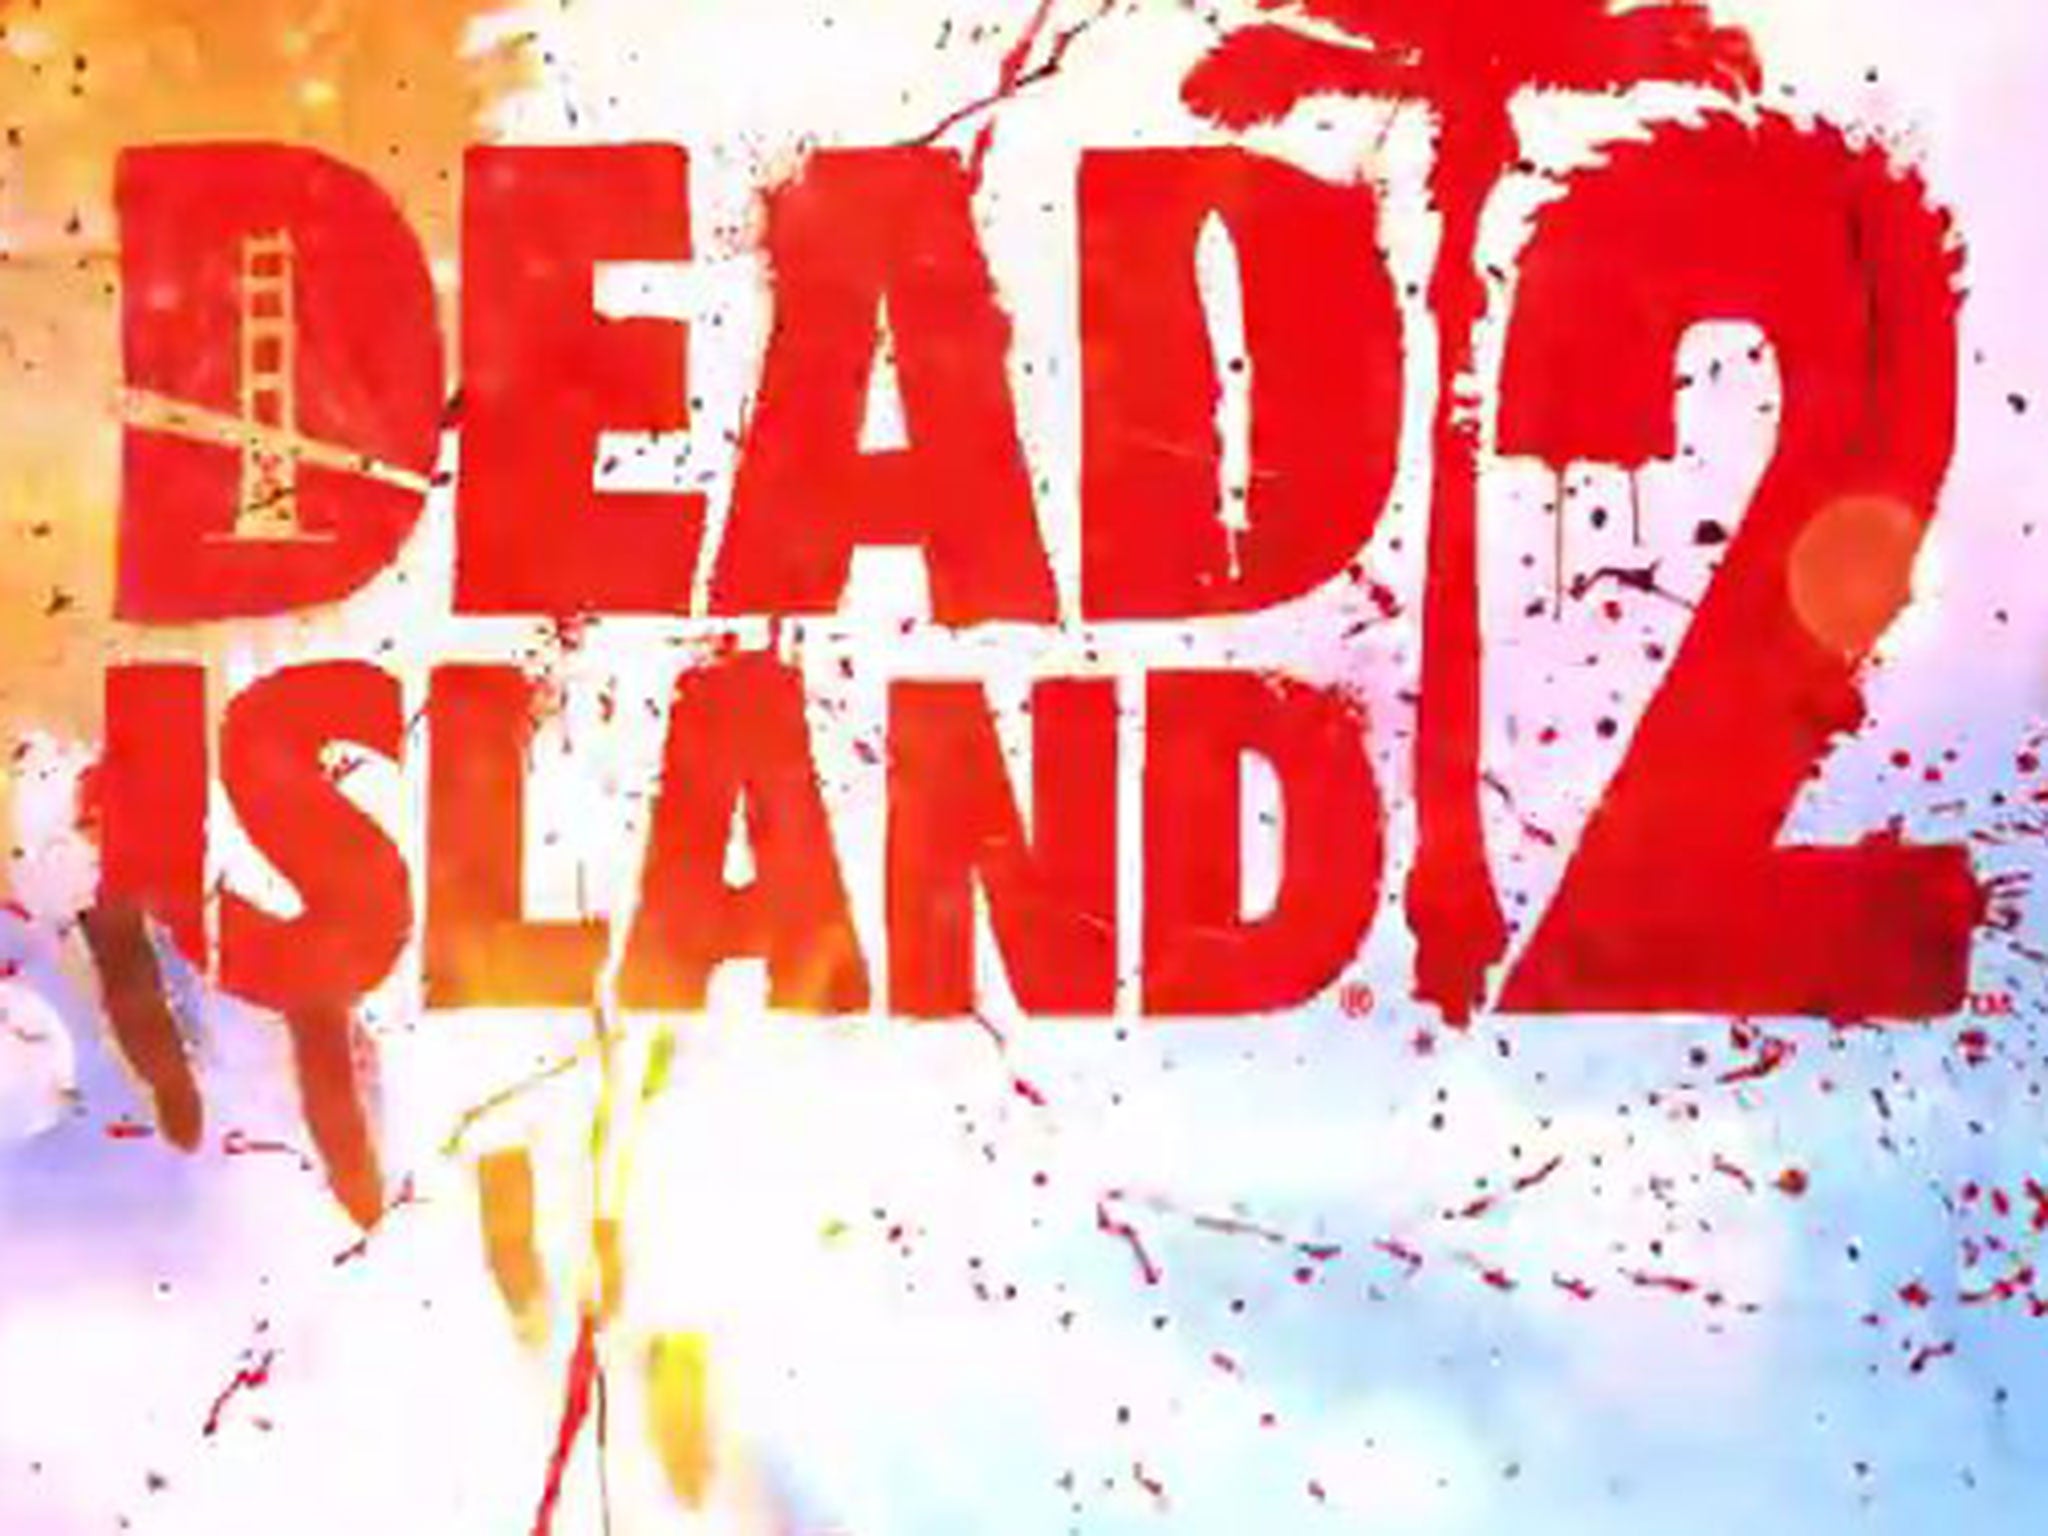 dead island 2 gameplay 2018